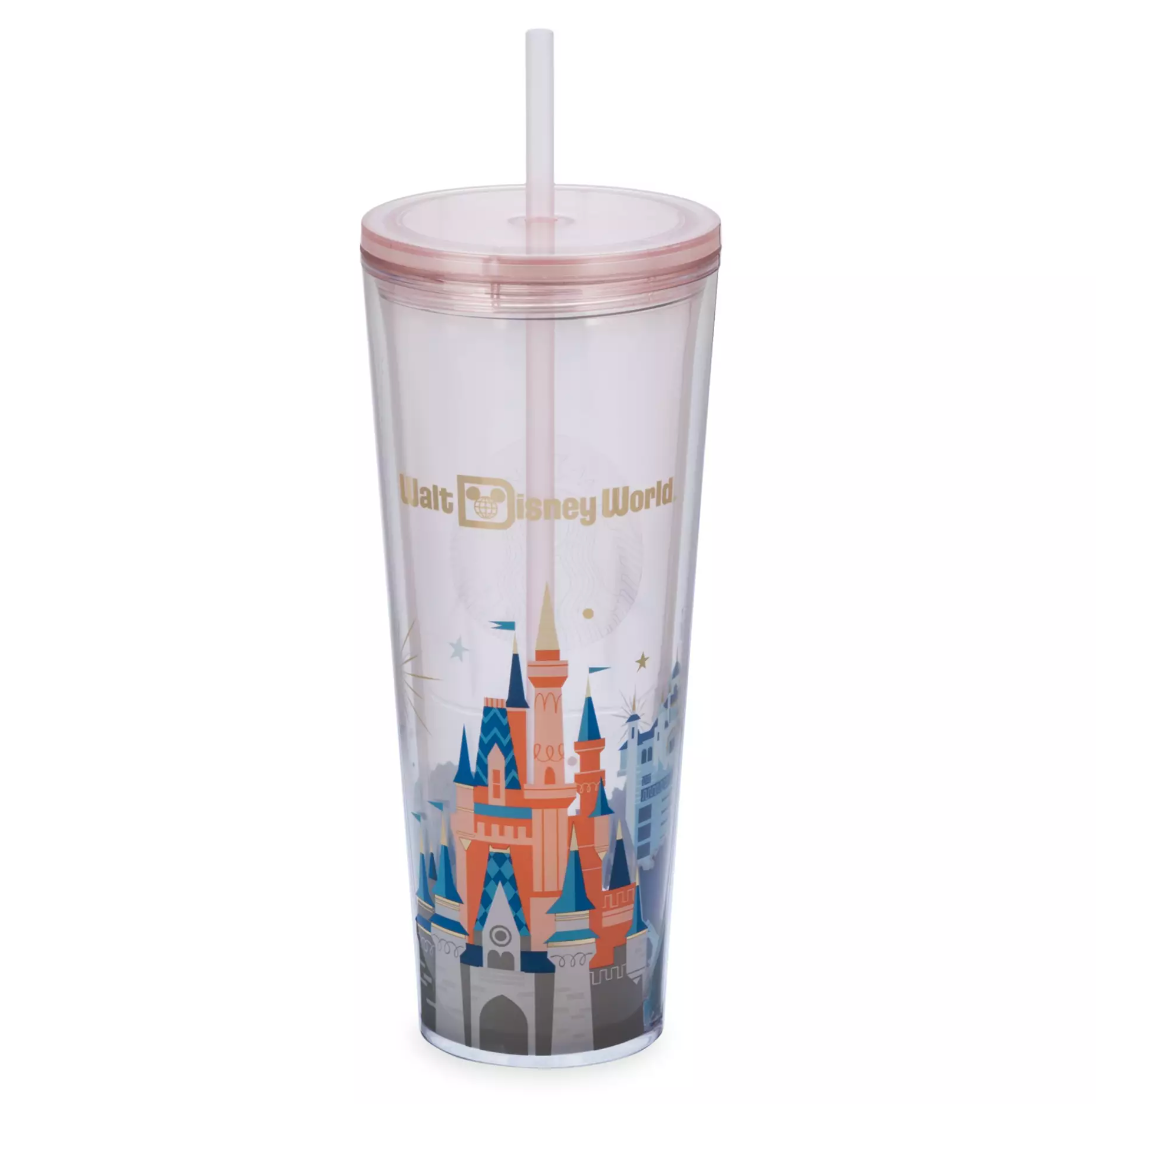 Disney Walt Disney World Cinderella Castle Starbucks Tumbler with Straw New - image 1 of 3